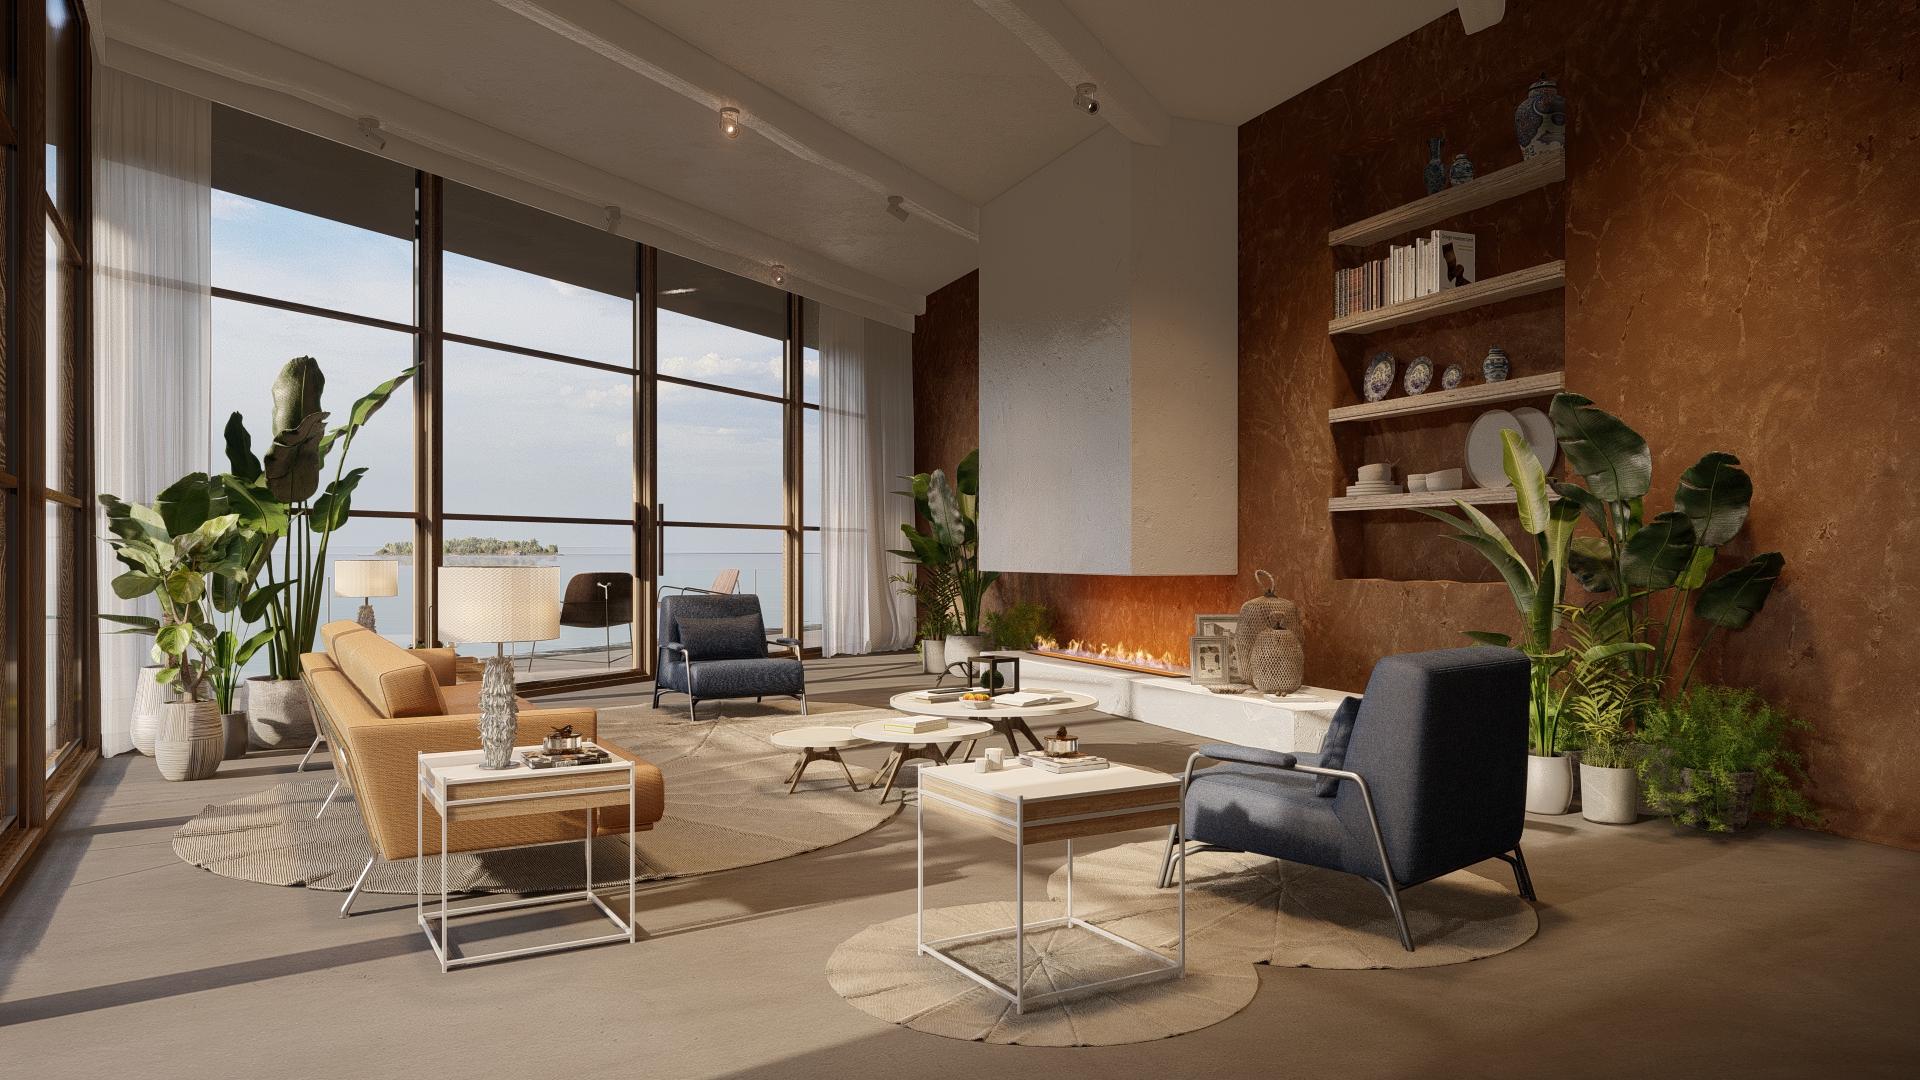 interior-rendering-living-room-with-retro-furniture.jpg